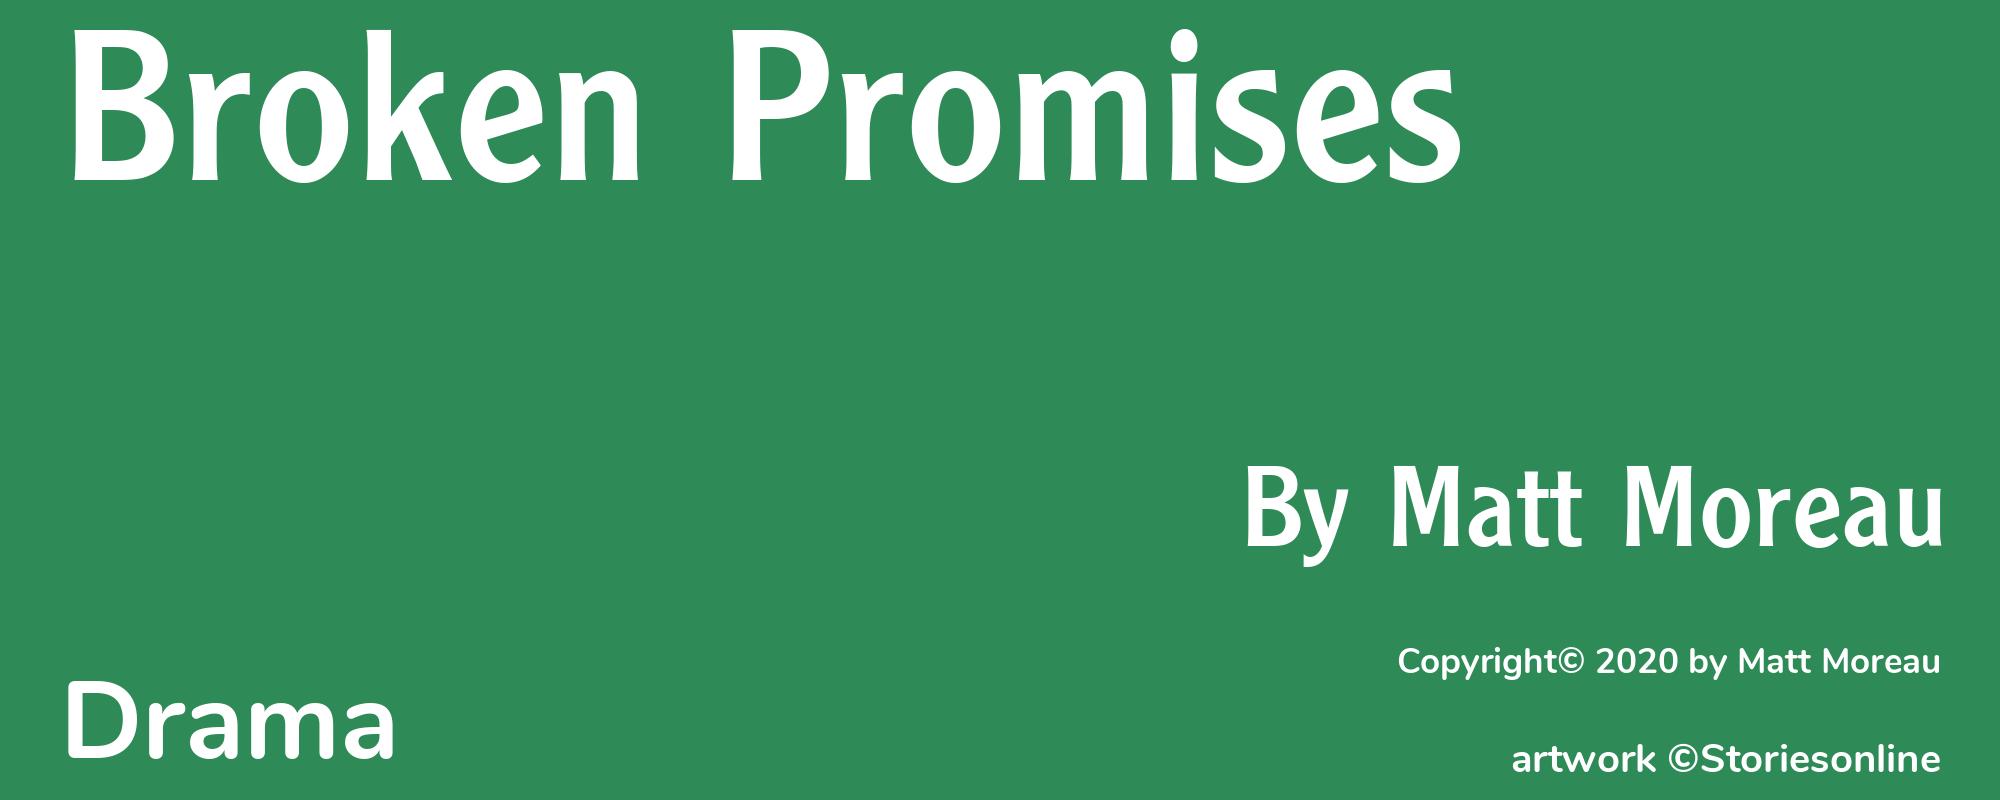 Broken Promises - Cover